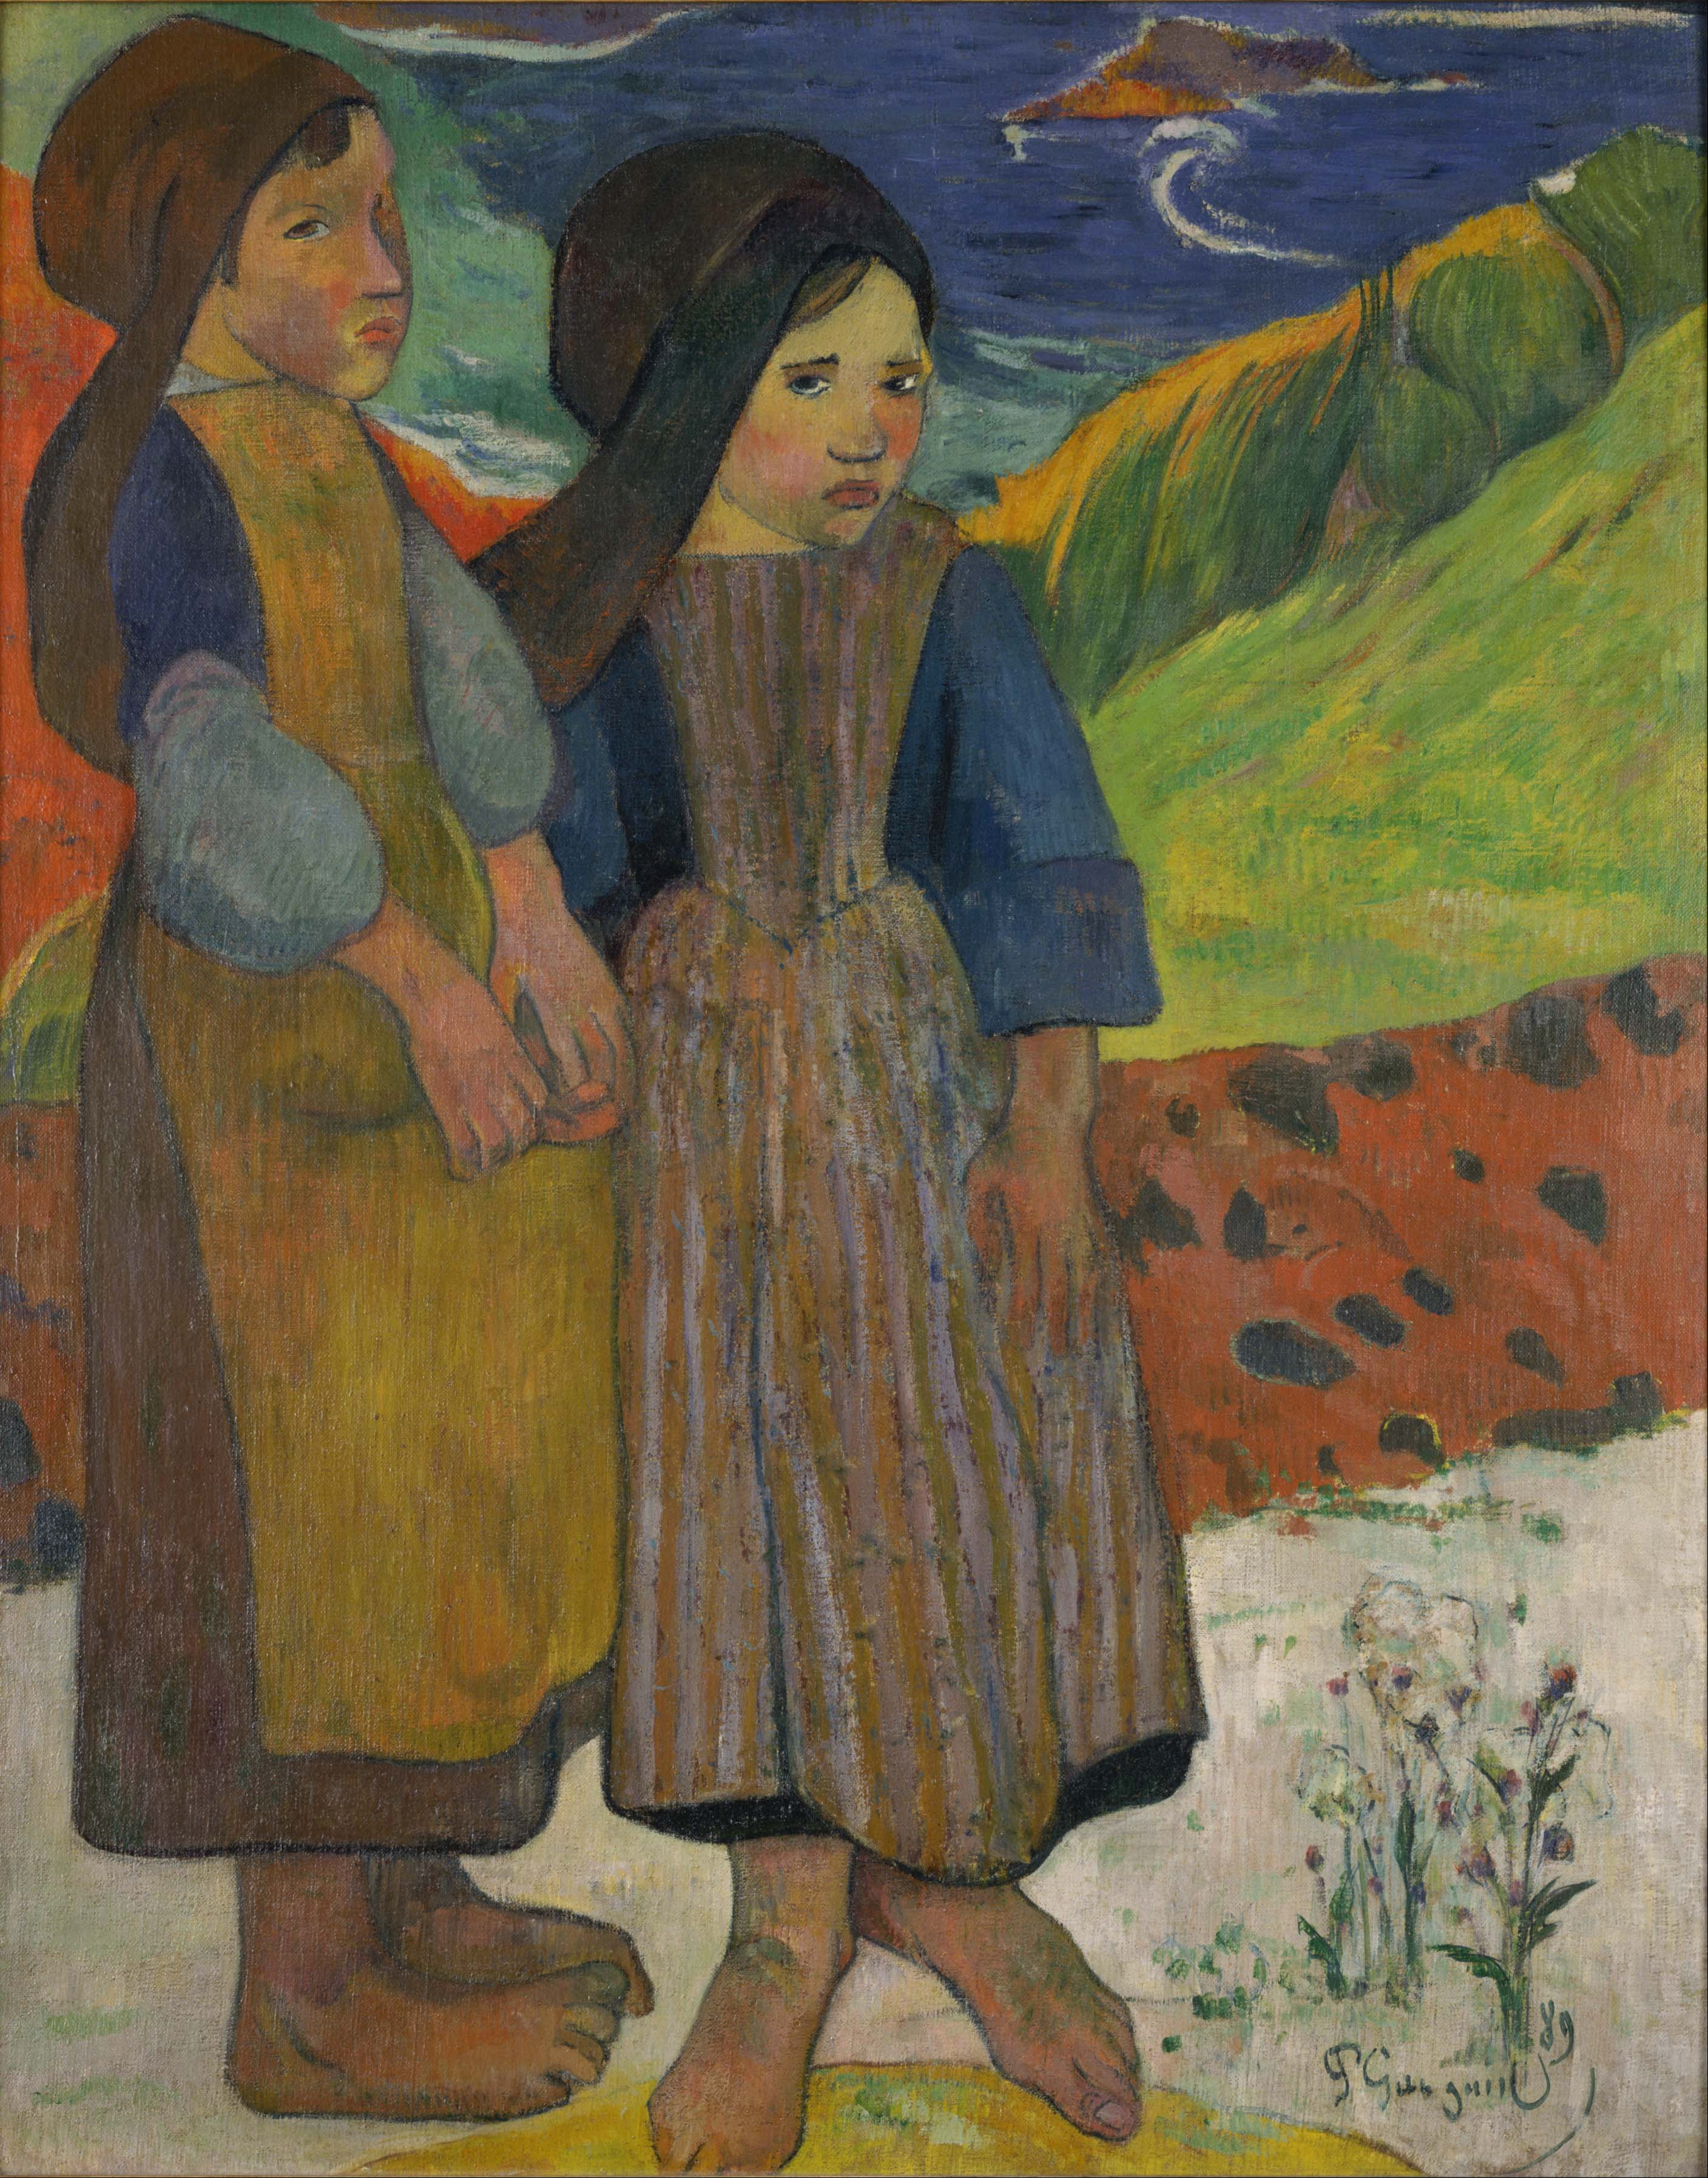 Két breton lány a tengerparton by Paul Gauguin - 1889 - 73.6 x 92.5 cm 